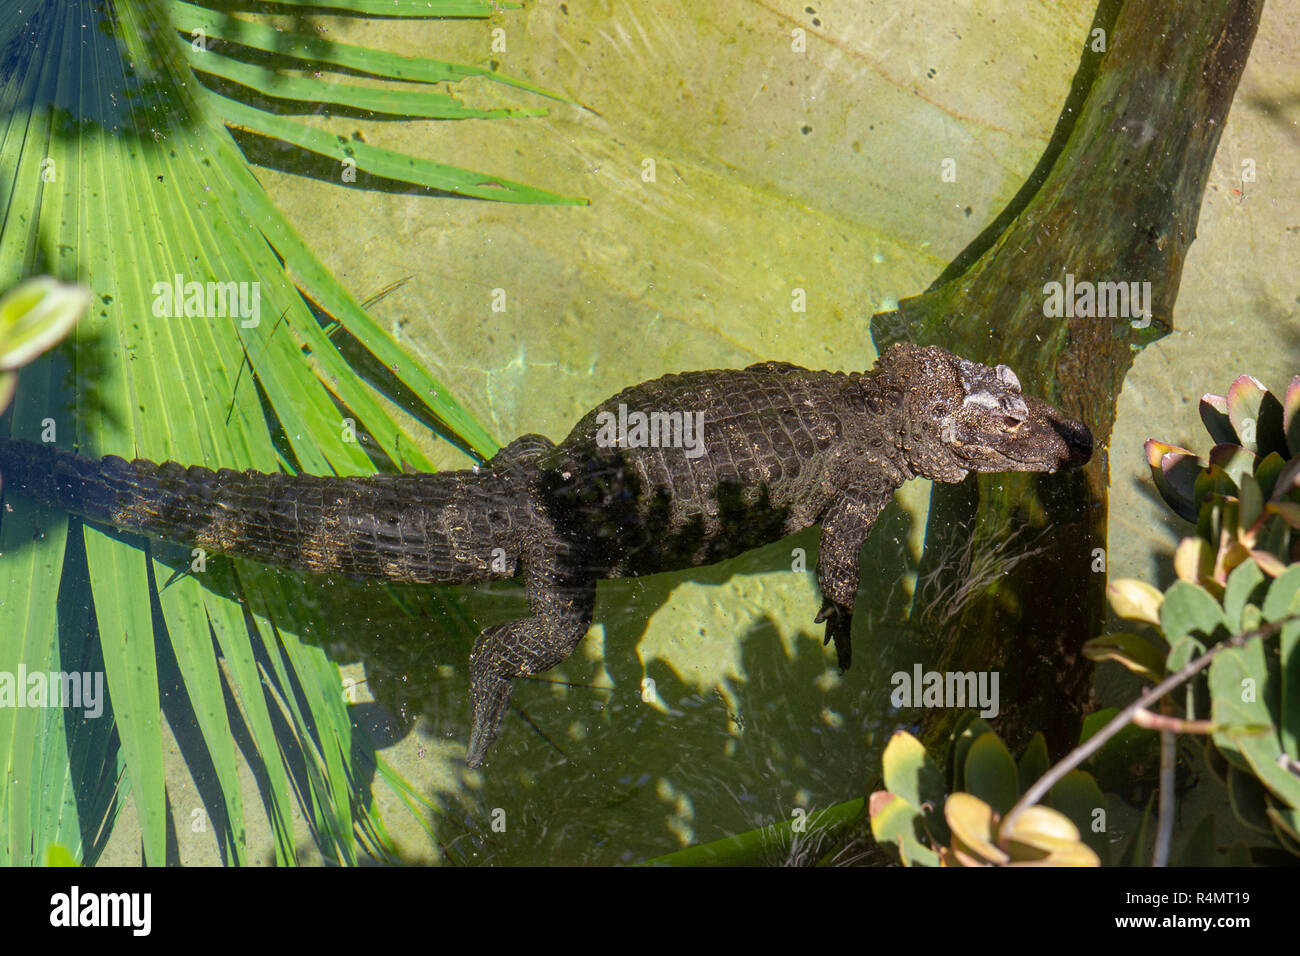 A Chinese alligator (Alligator sinensis), San Diego Zoo, Balboa Park, California, United States. Stock Photo